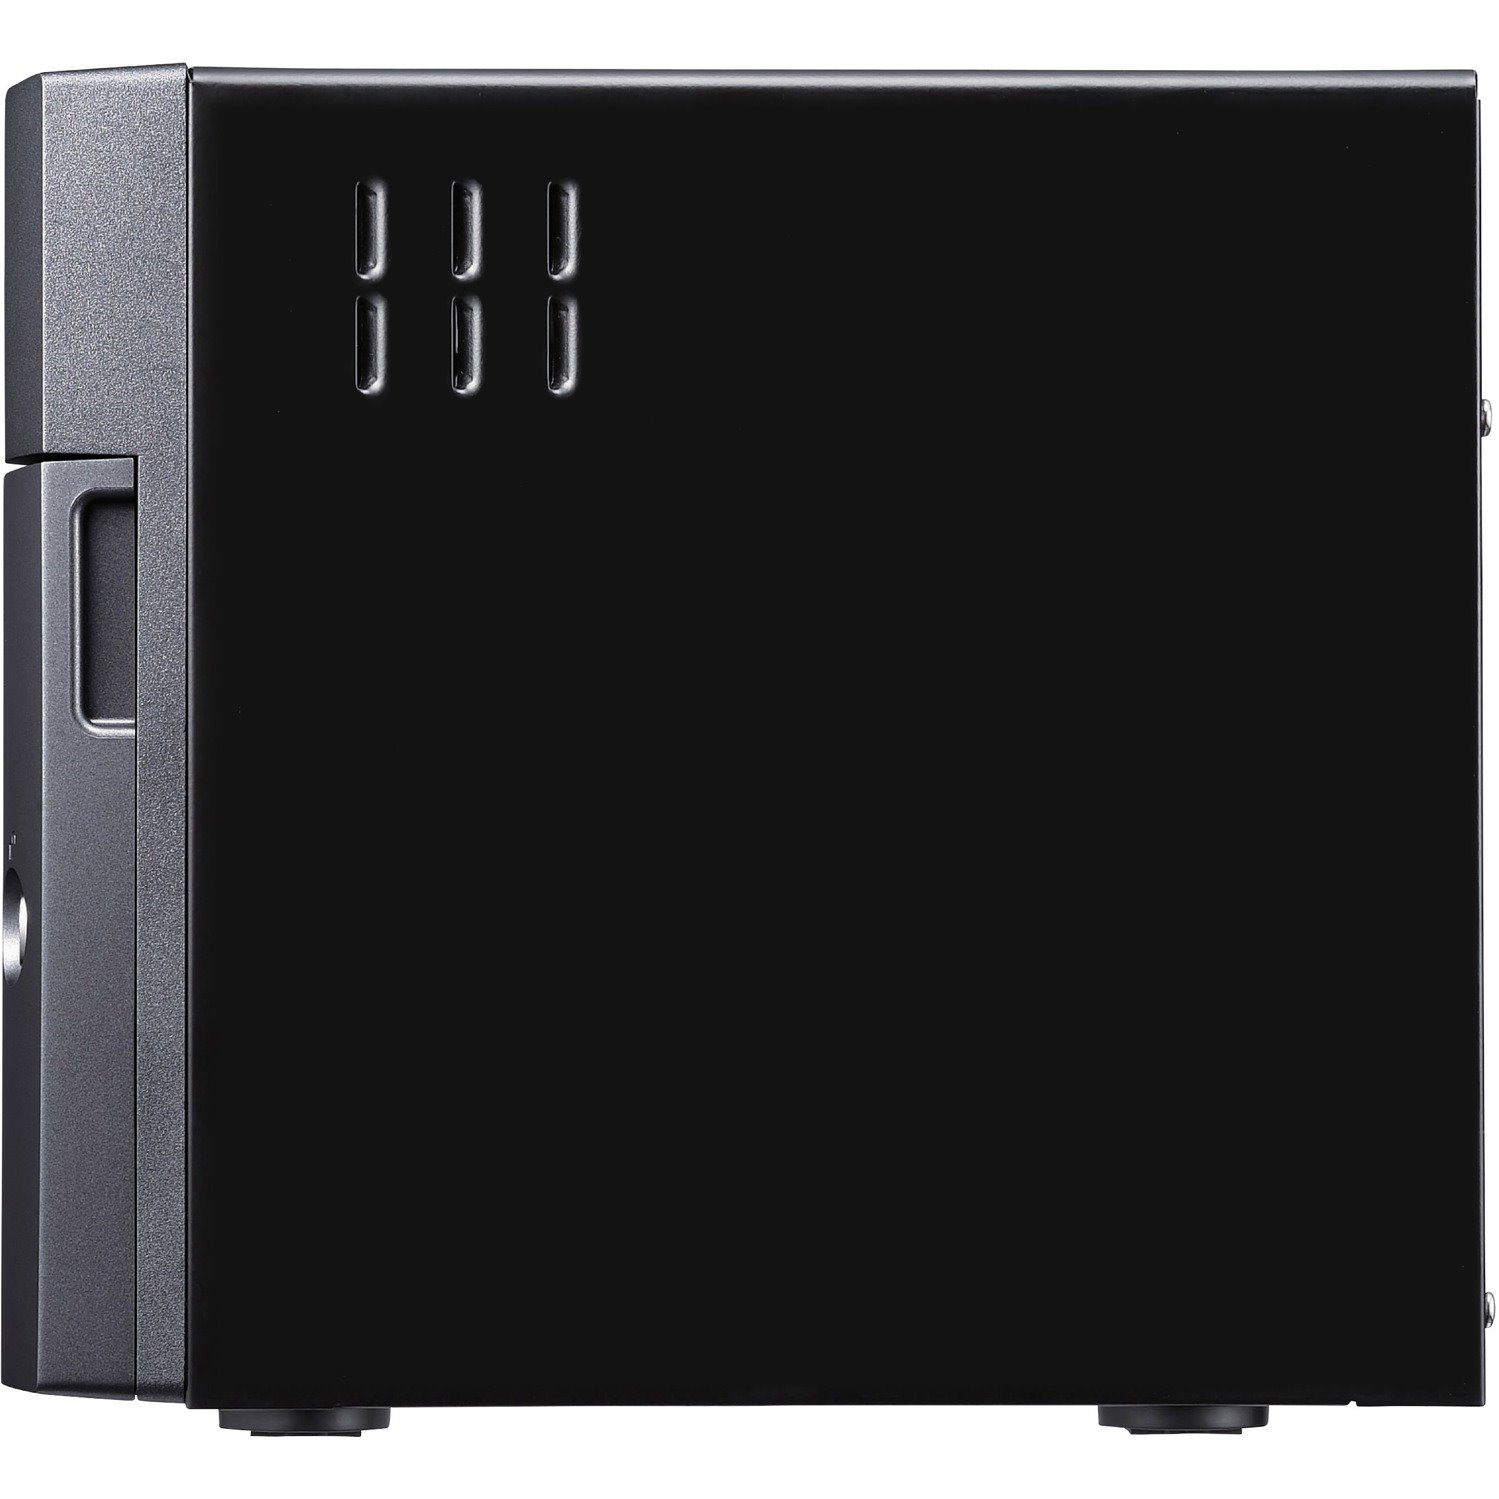 BUFFALO TeraStation 5420 4-Bay 64TB (4x16TB) Business Desktop NAS Storage Hard Drives Included